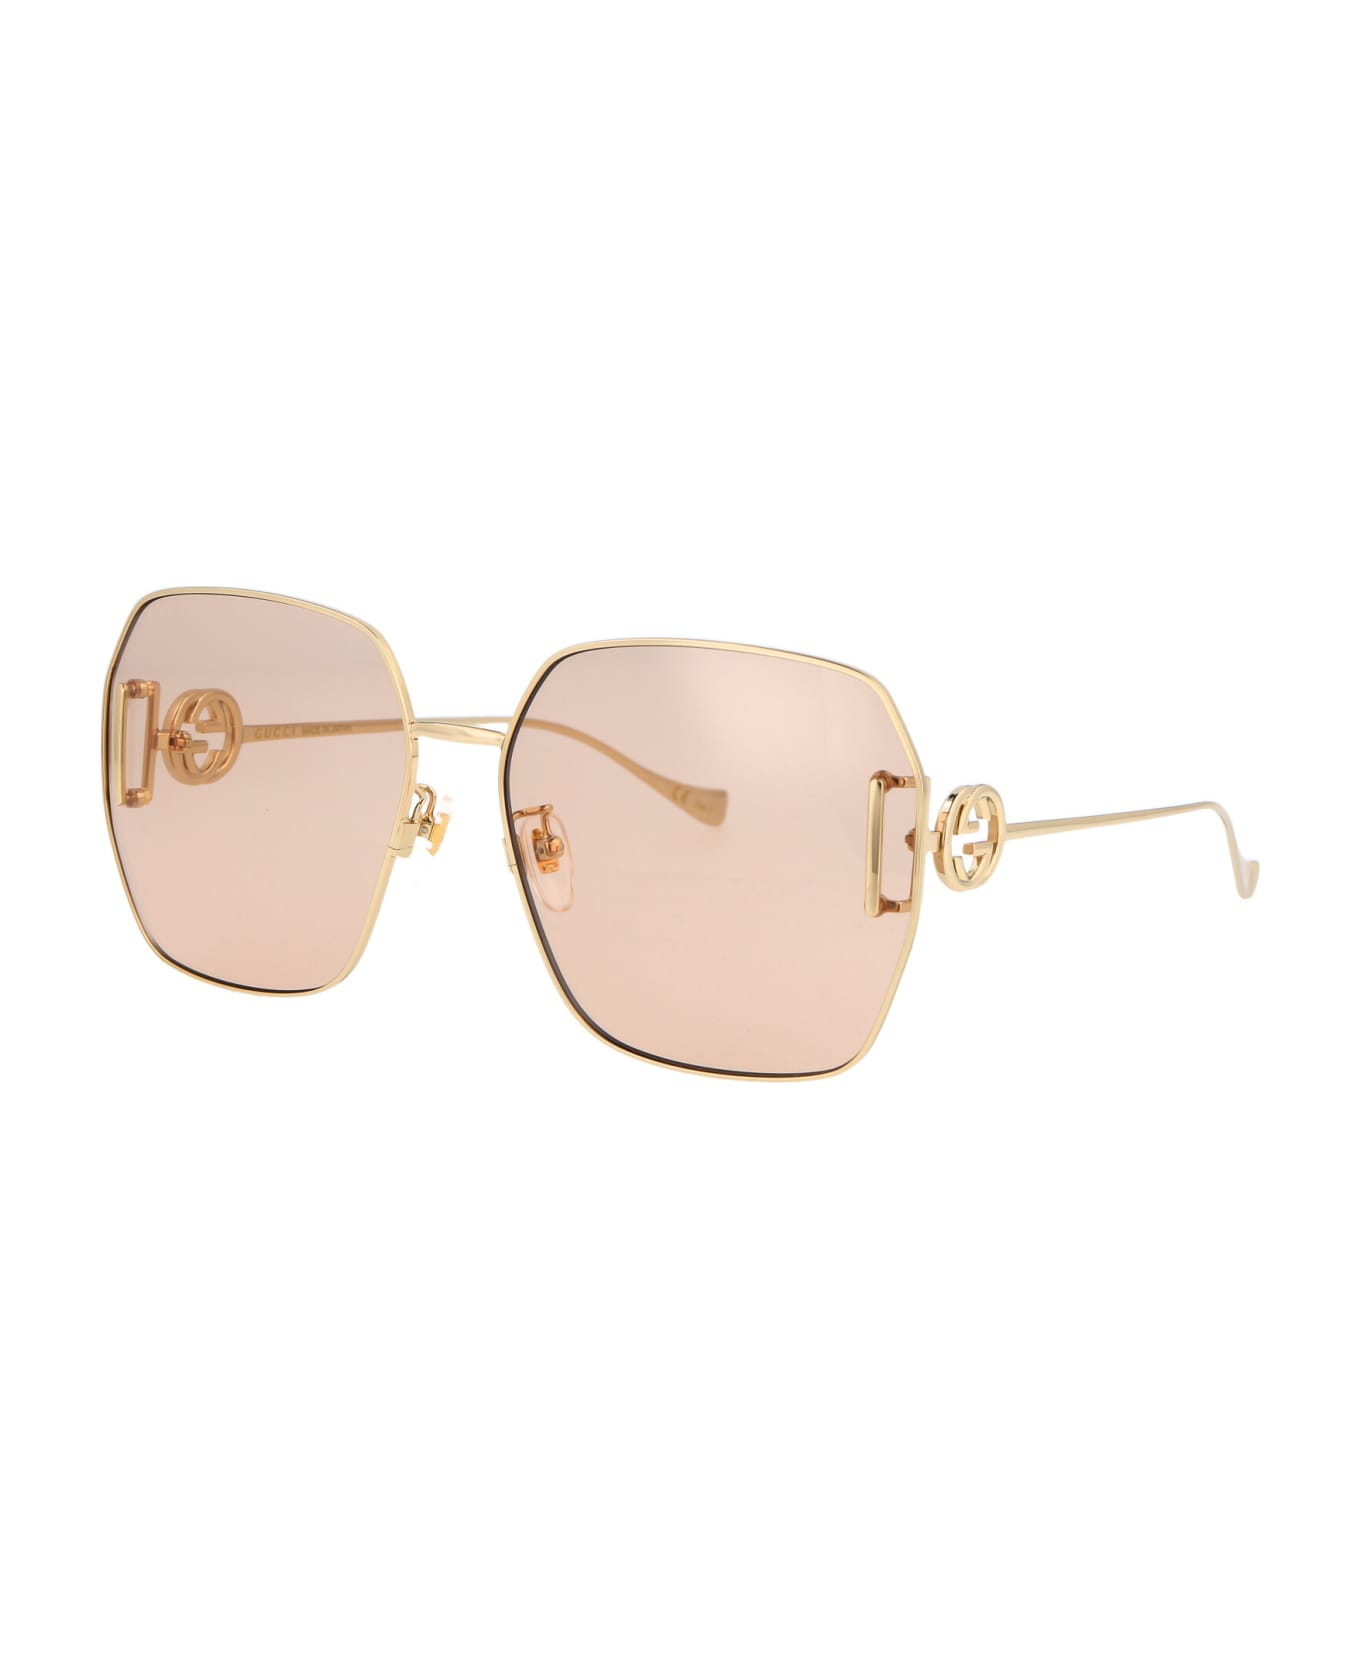 Gucci Eyewear Gg1207sa Sunglasses - 001 GOLD GOLD BROWN サングラス